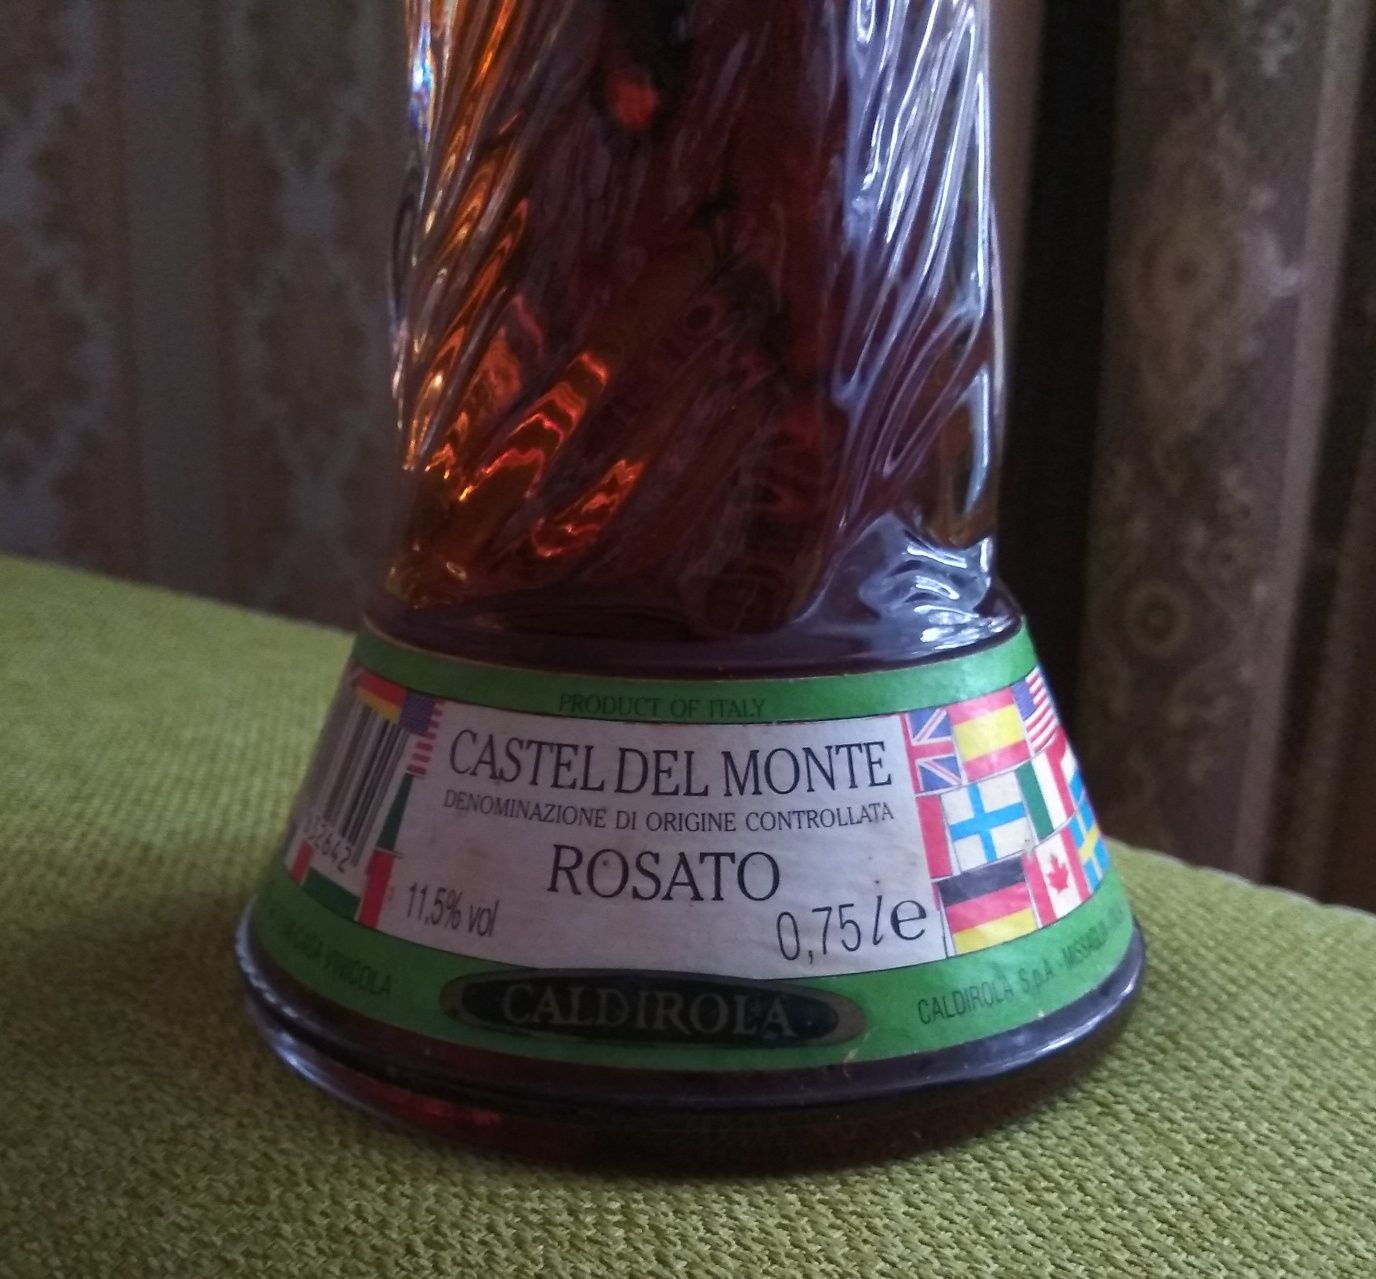 Mondiale 1990 (Vini Italia, Castel Del Monte, CALDIROLA, rosato).